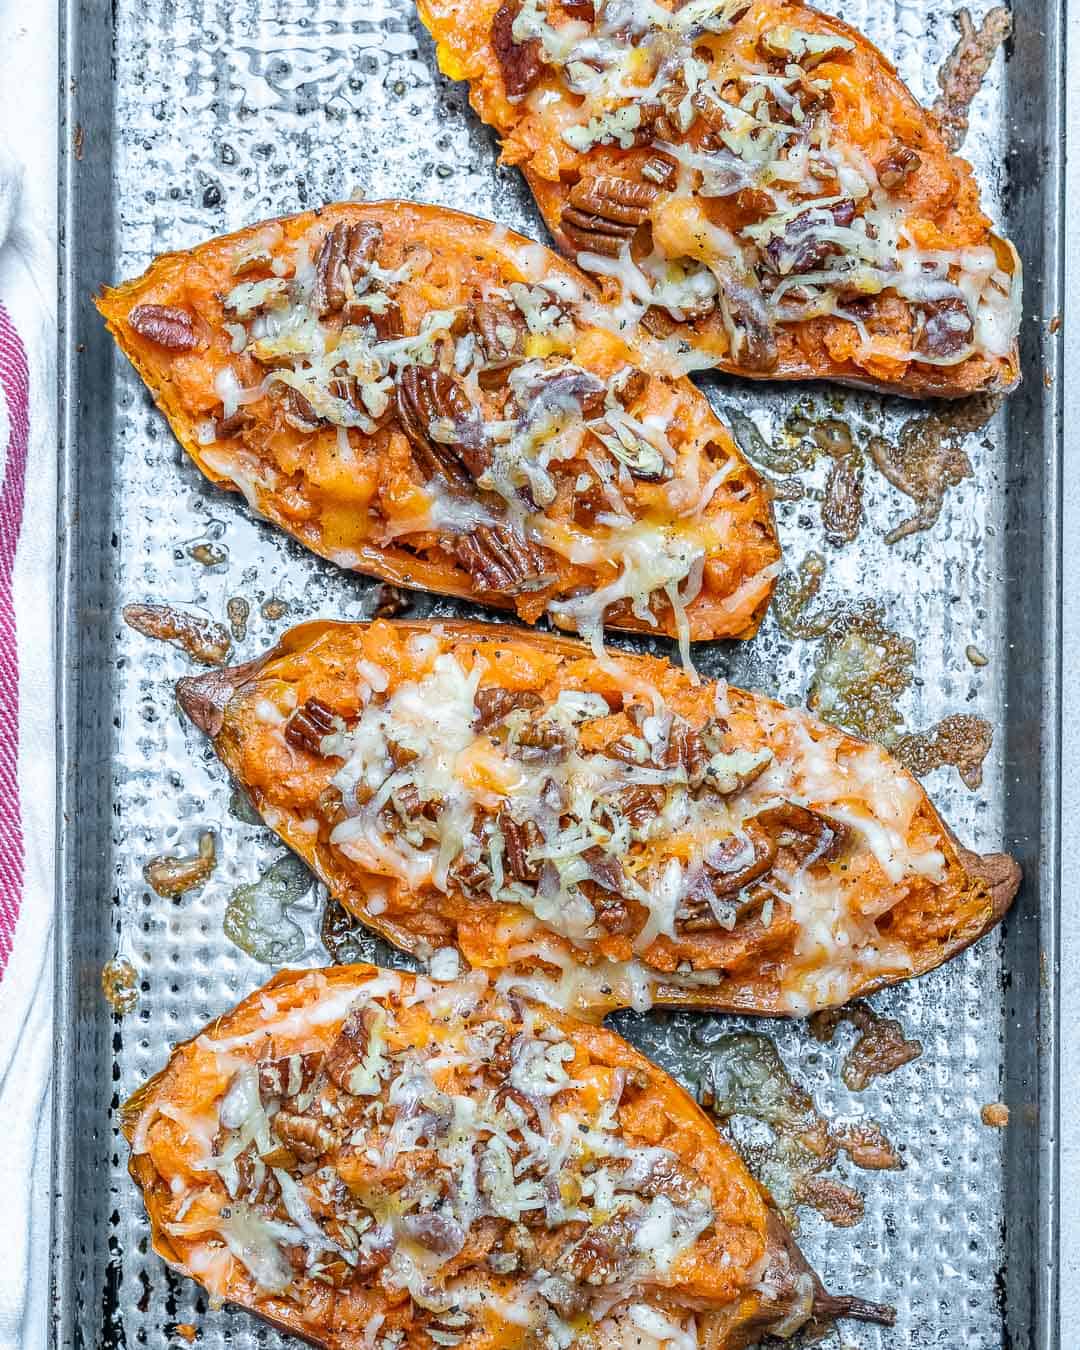 4 sweet potatoes on a baking tray